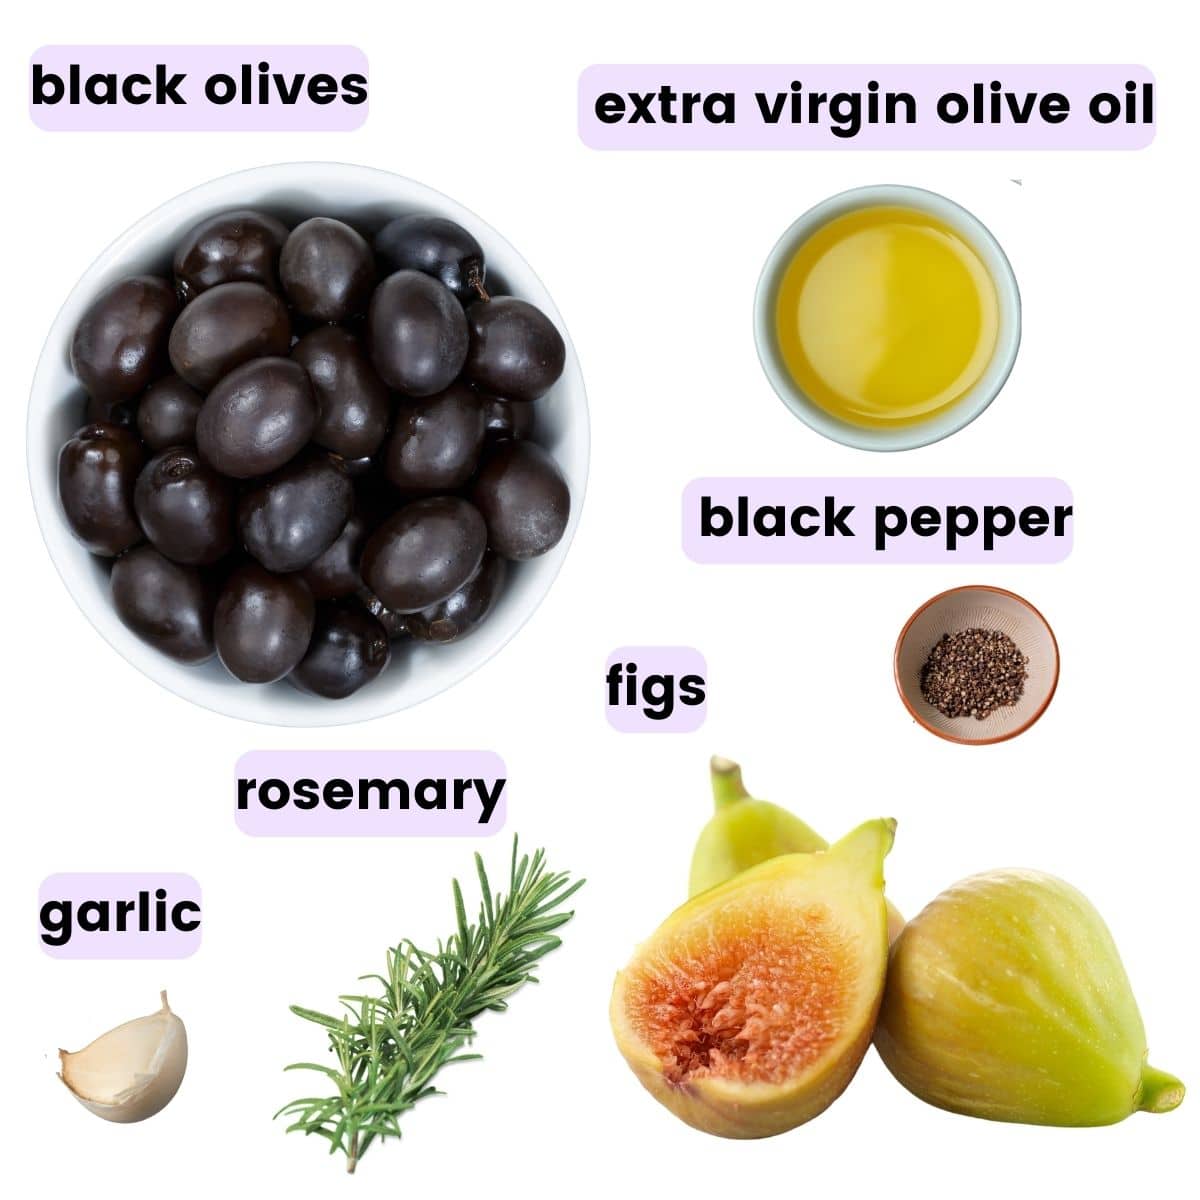 black olives, extra virgin olive oil. garlic, rosemary, figs, black pepper